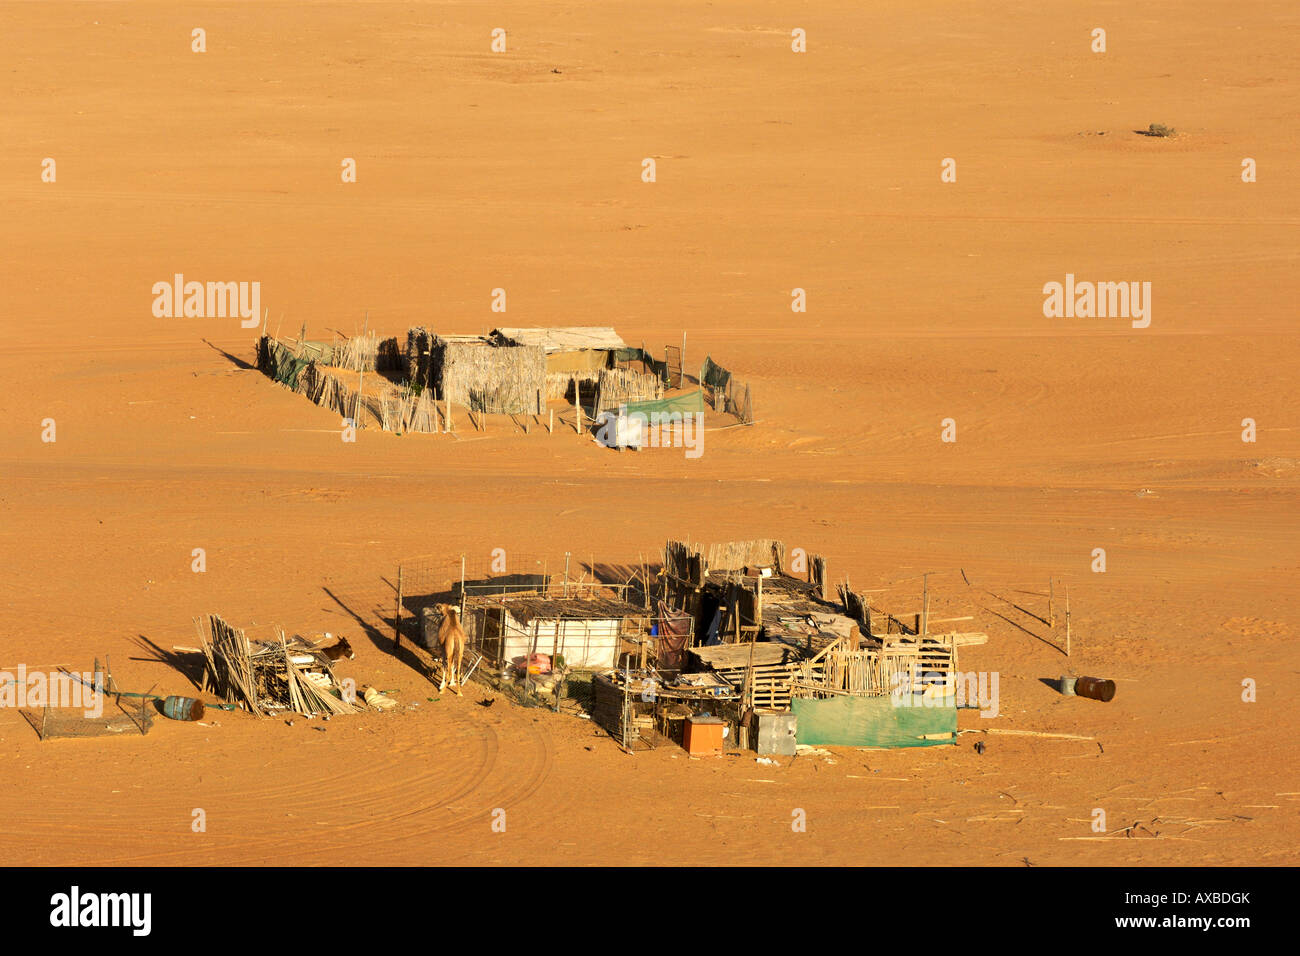 Bedouin settlement in Wahiba Sands (Ramlat al Wahaybah) in Oman. Stock Photo